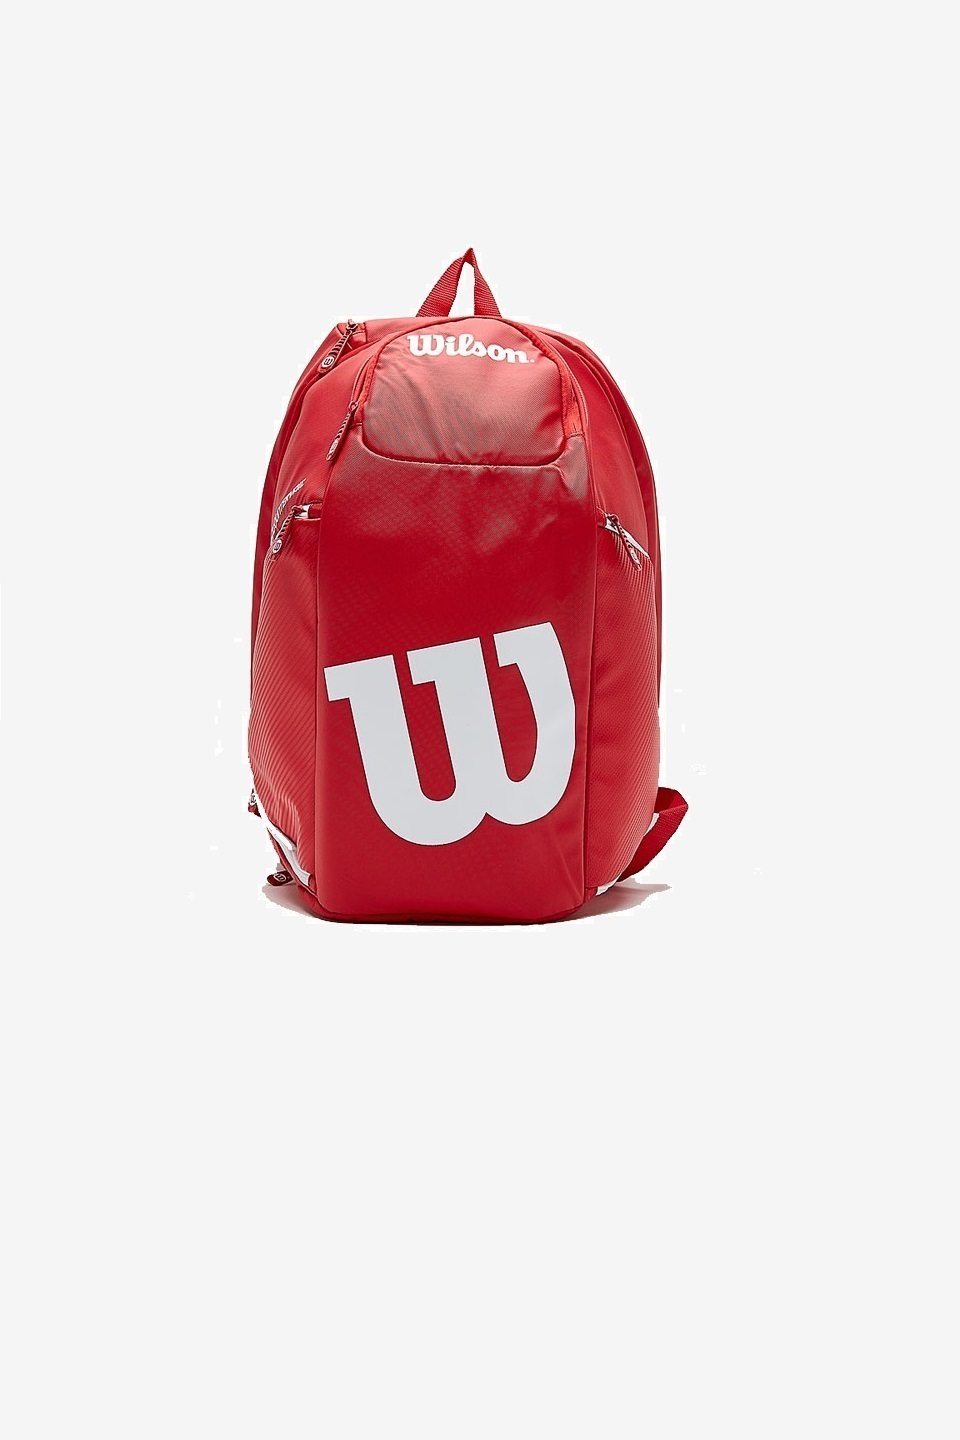 WİLSON - Wilson Vancouver Backpack Kırmızı